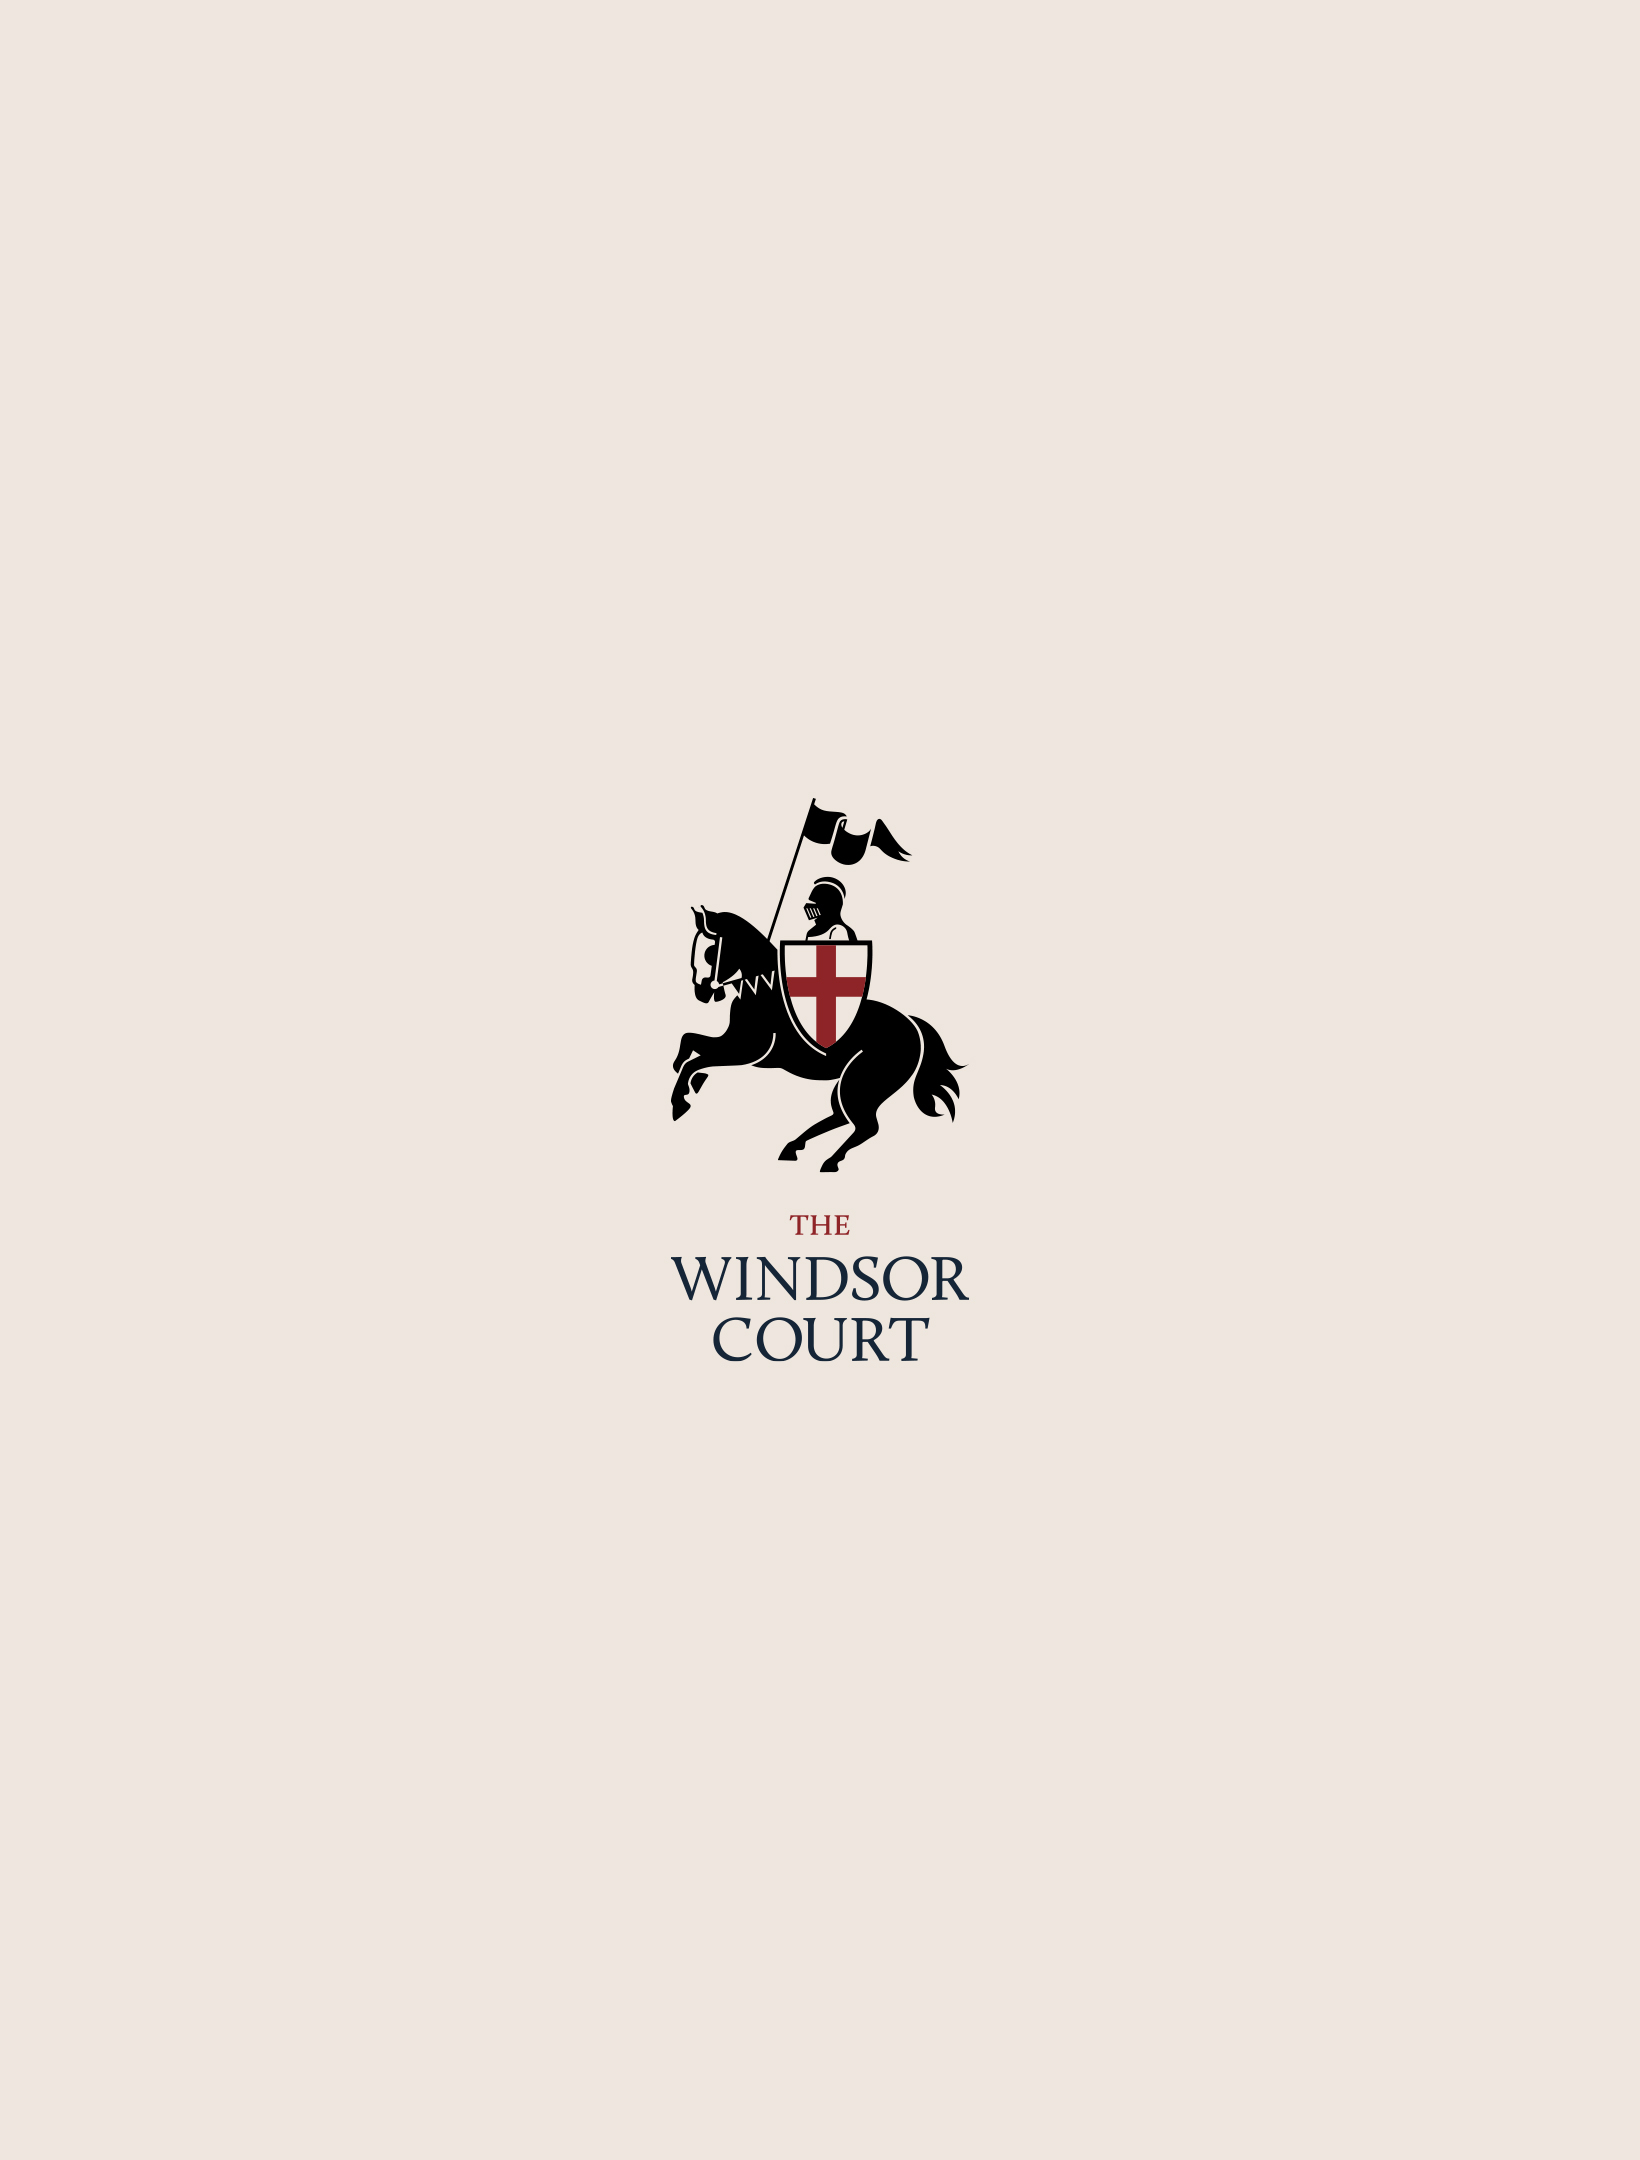 The Windsor Court - Neiter Creative